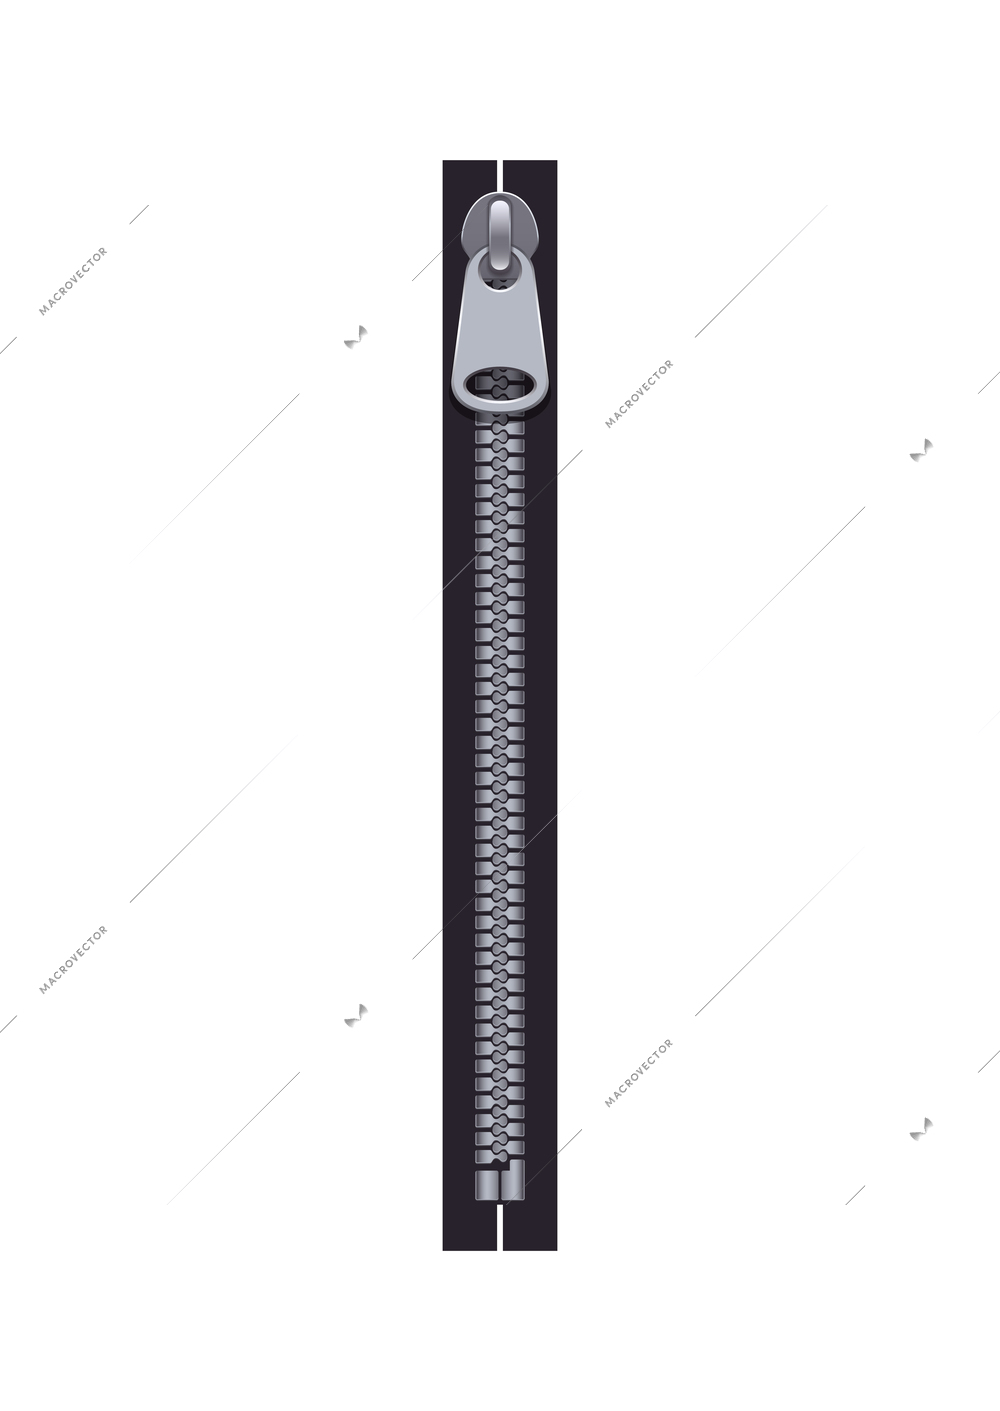 Realistic silver zip fastener vector illustration